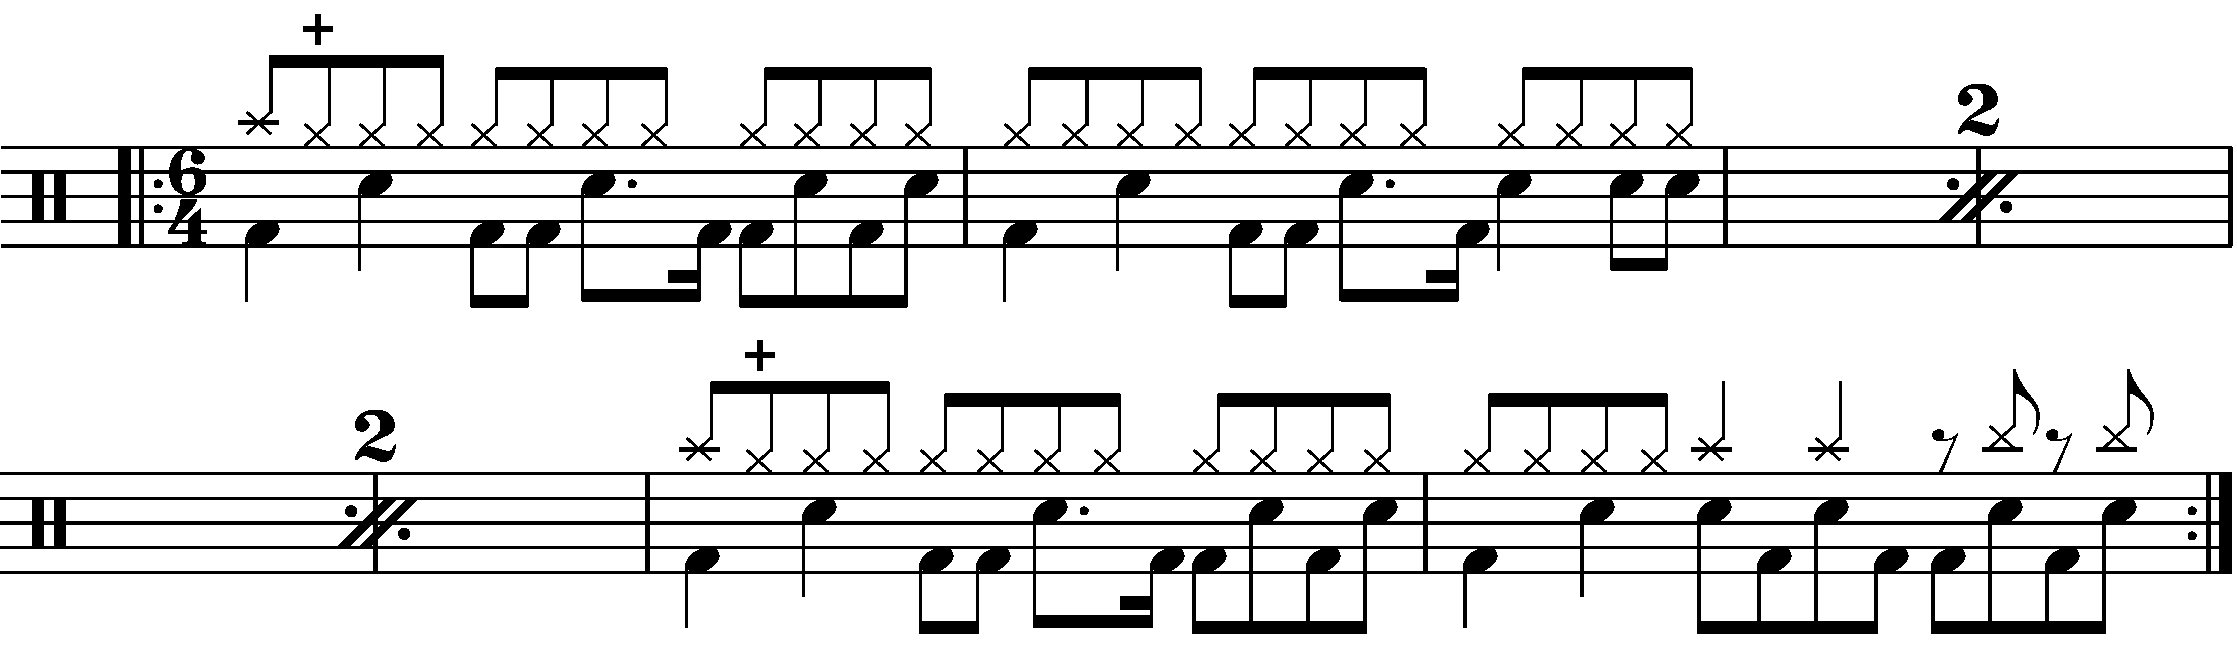 An eight bar phrase built of an AAAB pattern using 2 bar 6/4 grooves